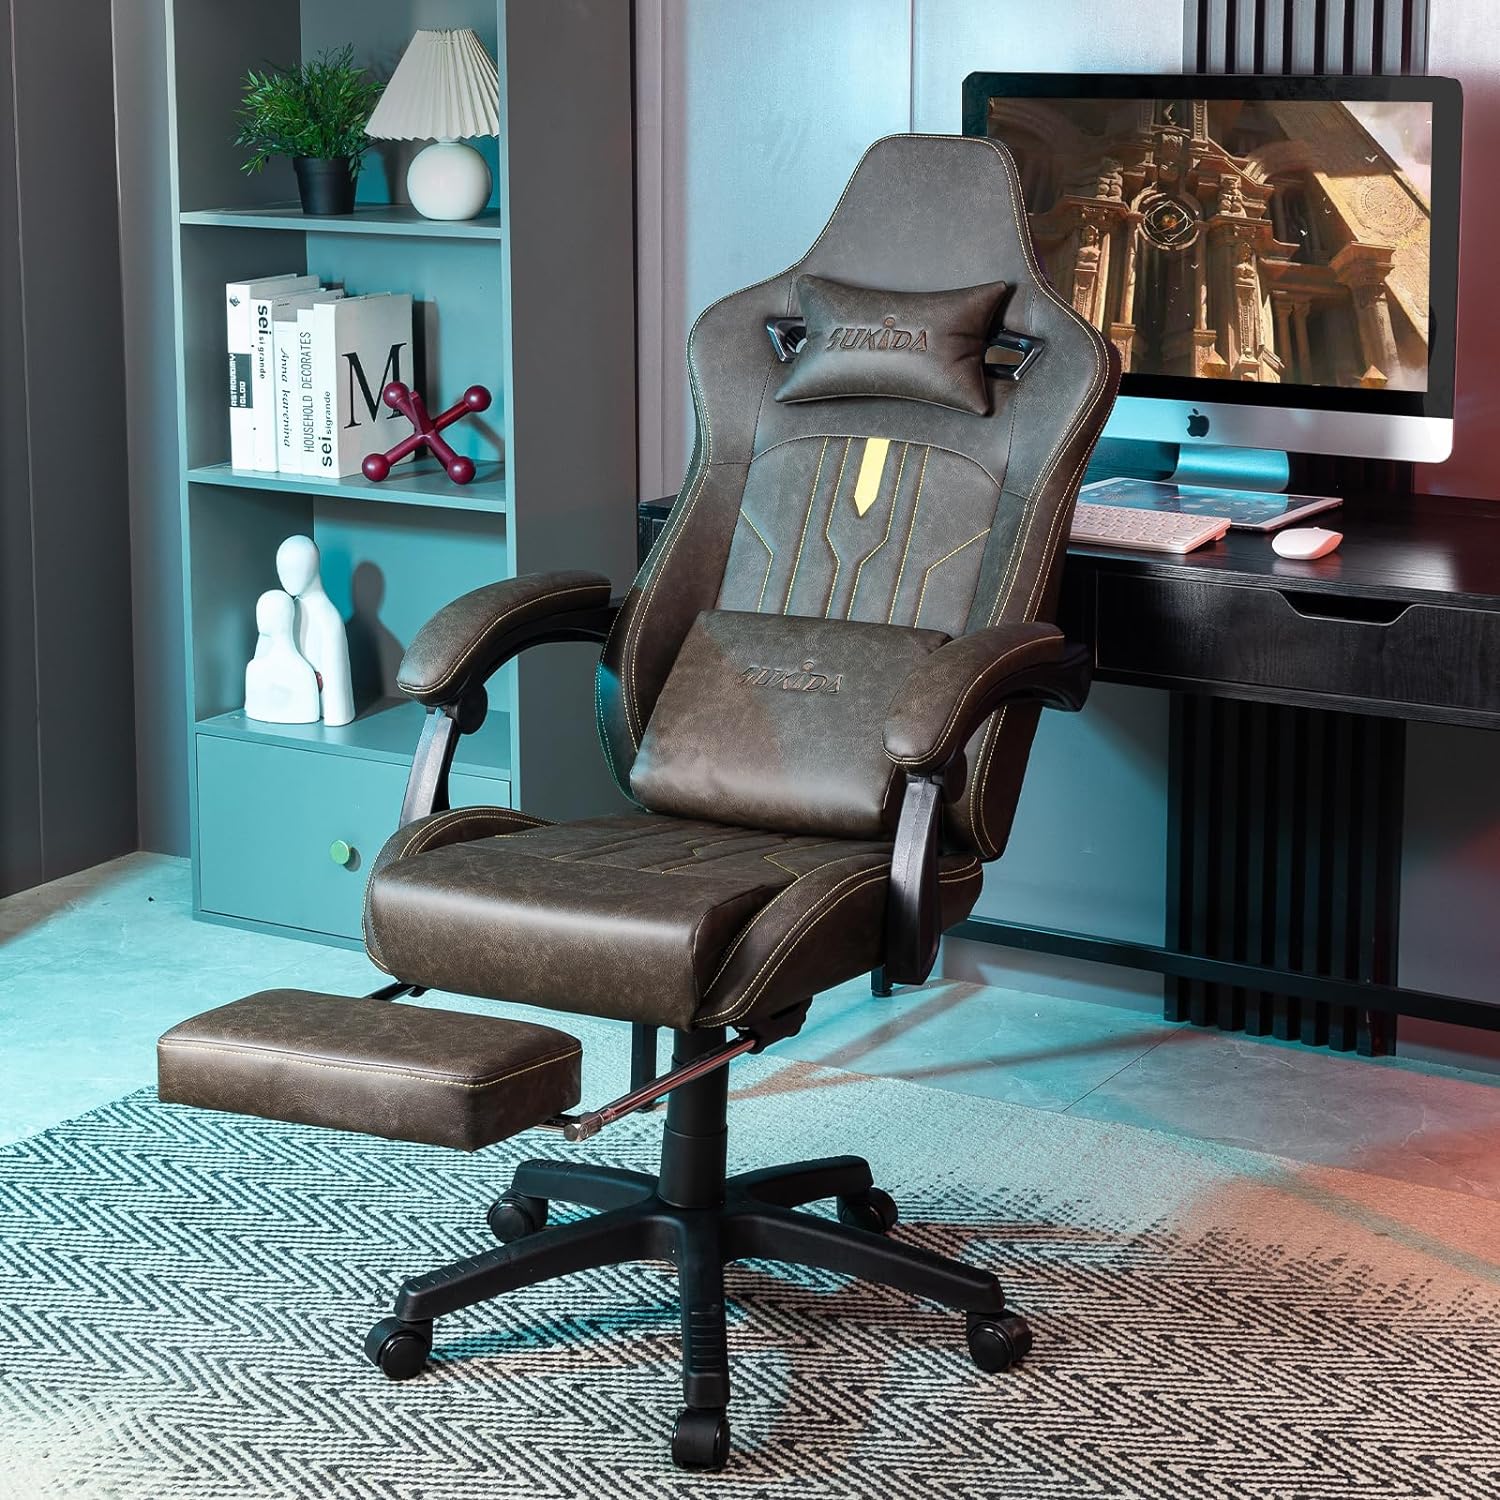 1 juego de silla de oficina, reposacabezas, silla de escritorio,  reposacabezas, accesorio para silla de oficina, cojín de soporte para el  cuello